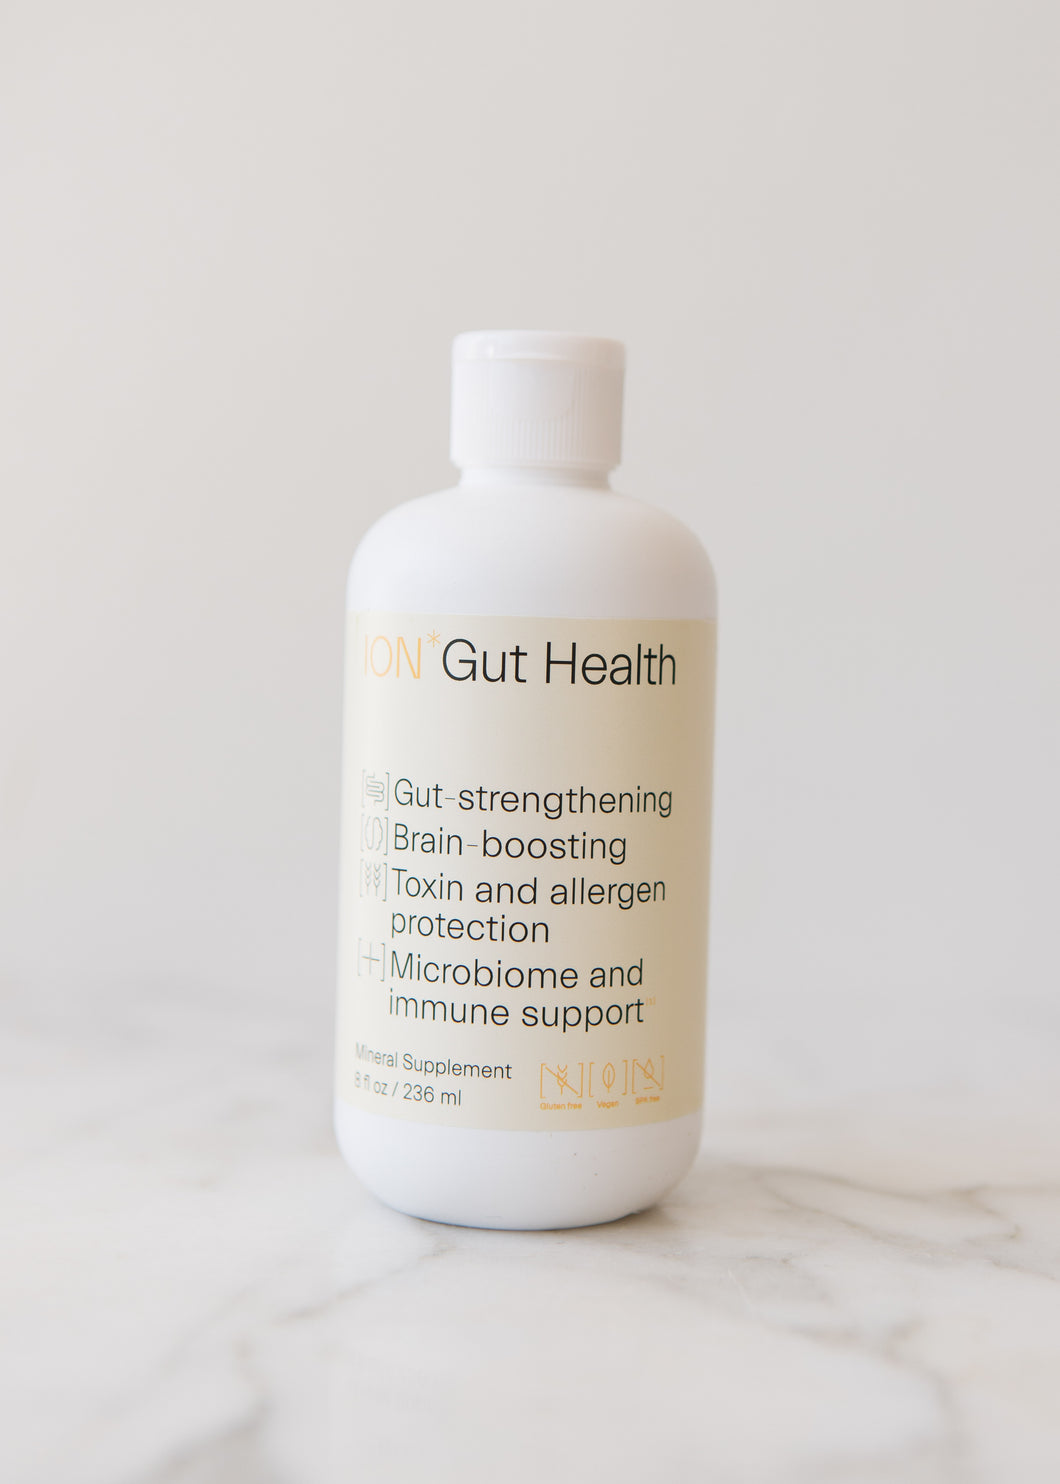 ION Gut Health Supplement